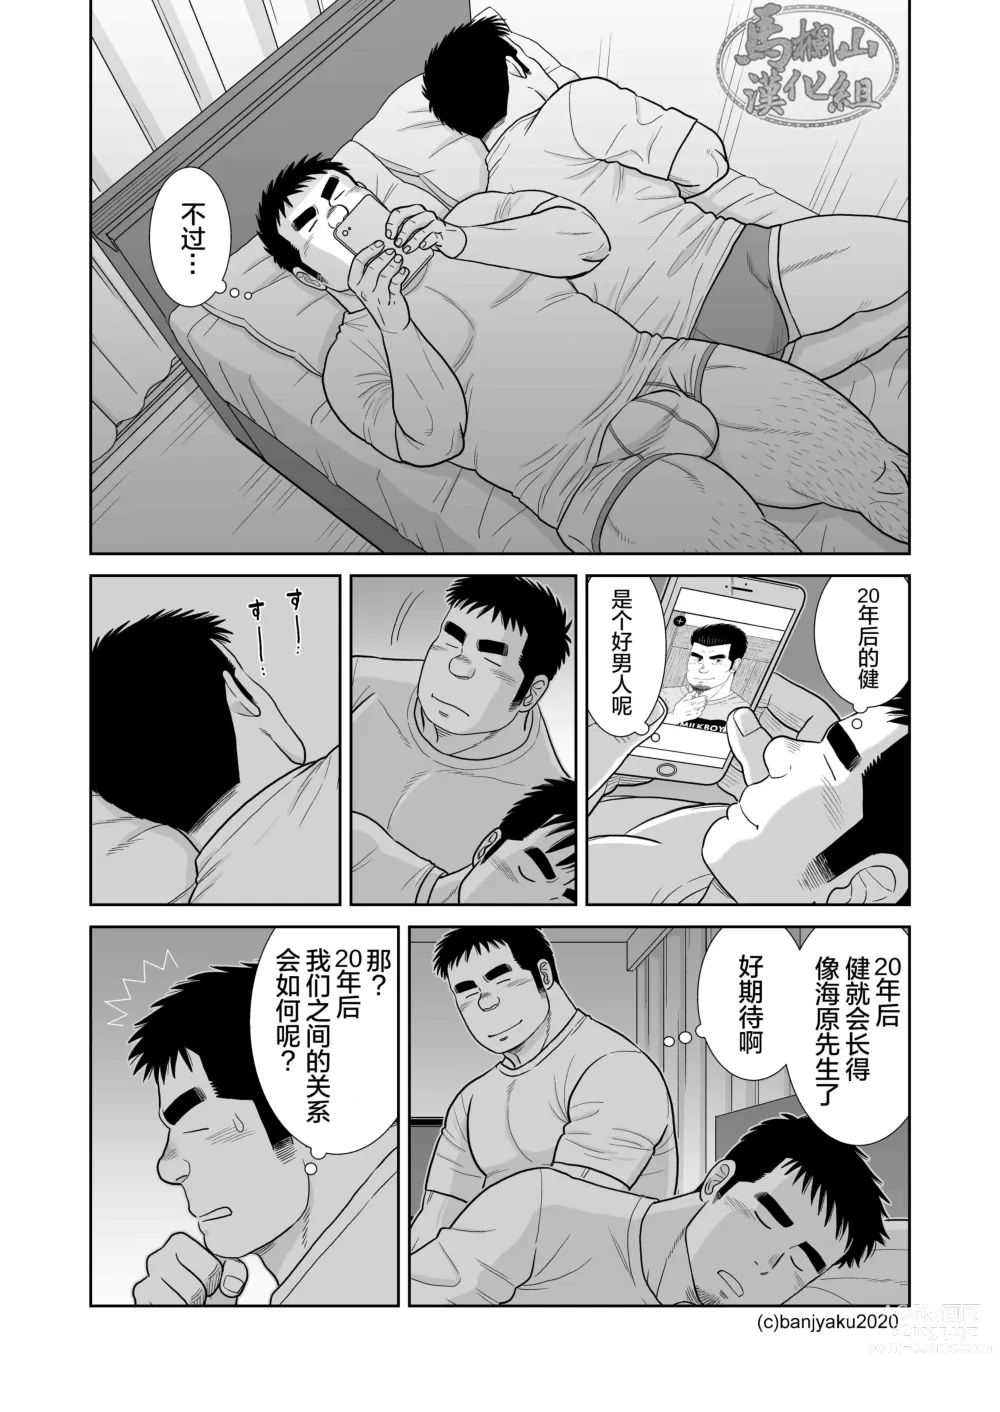 Page 8 of manga 20年後の君に